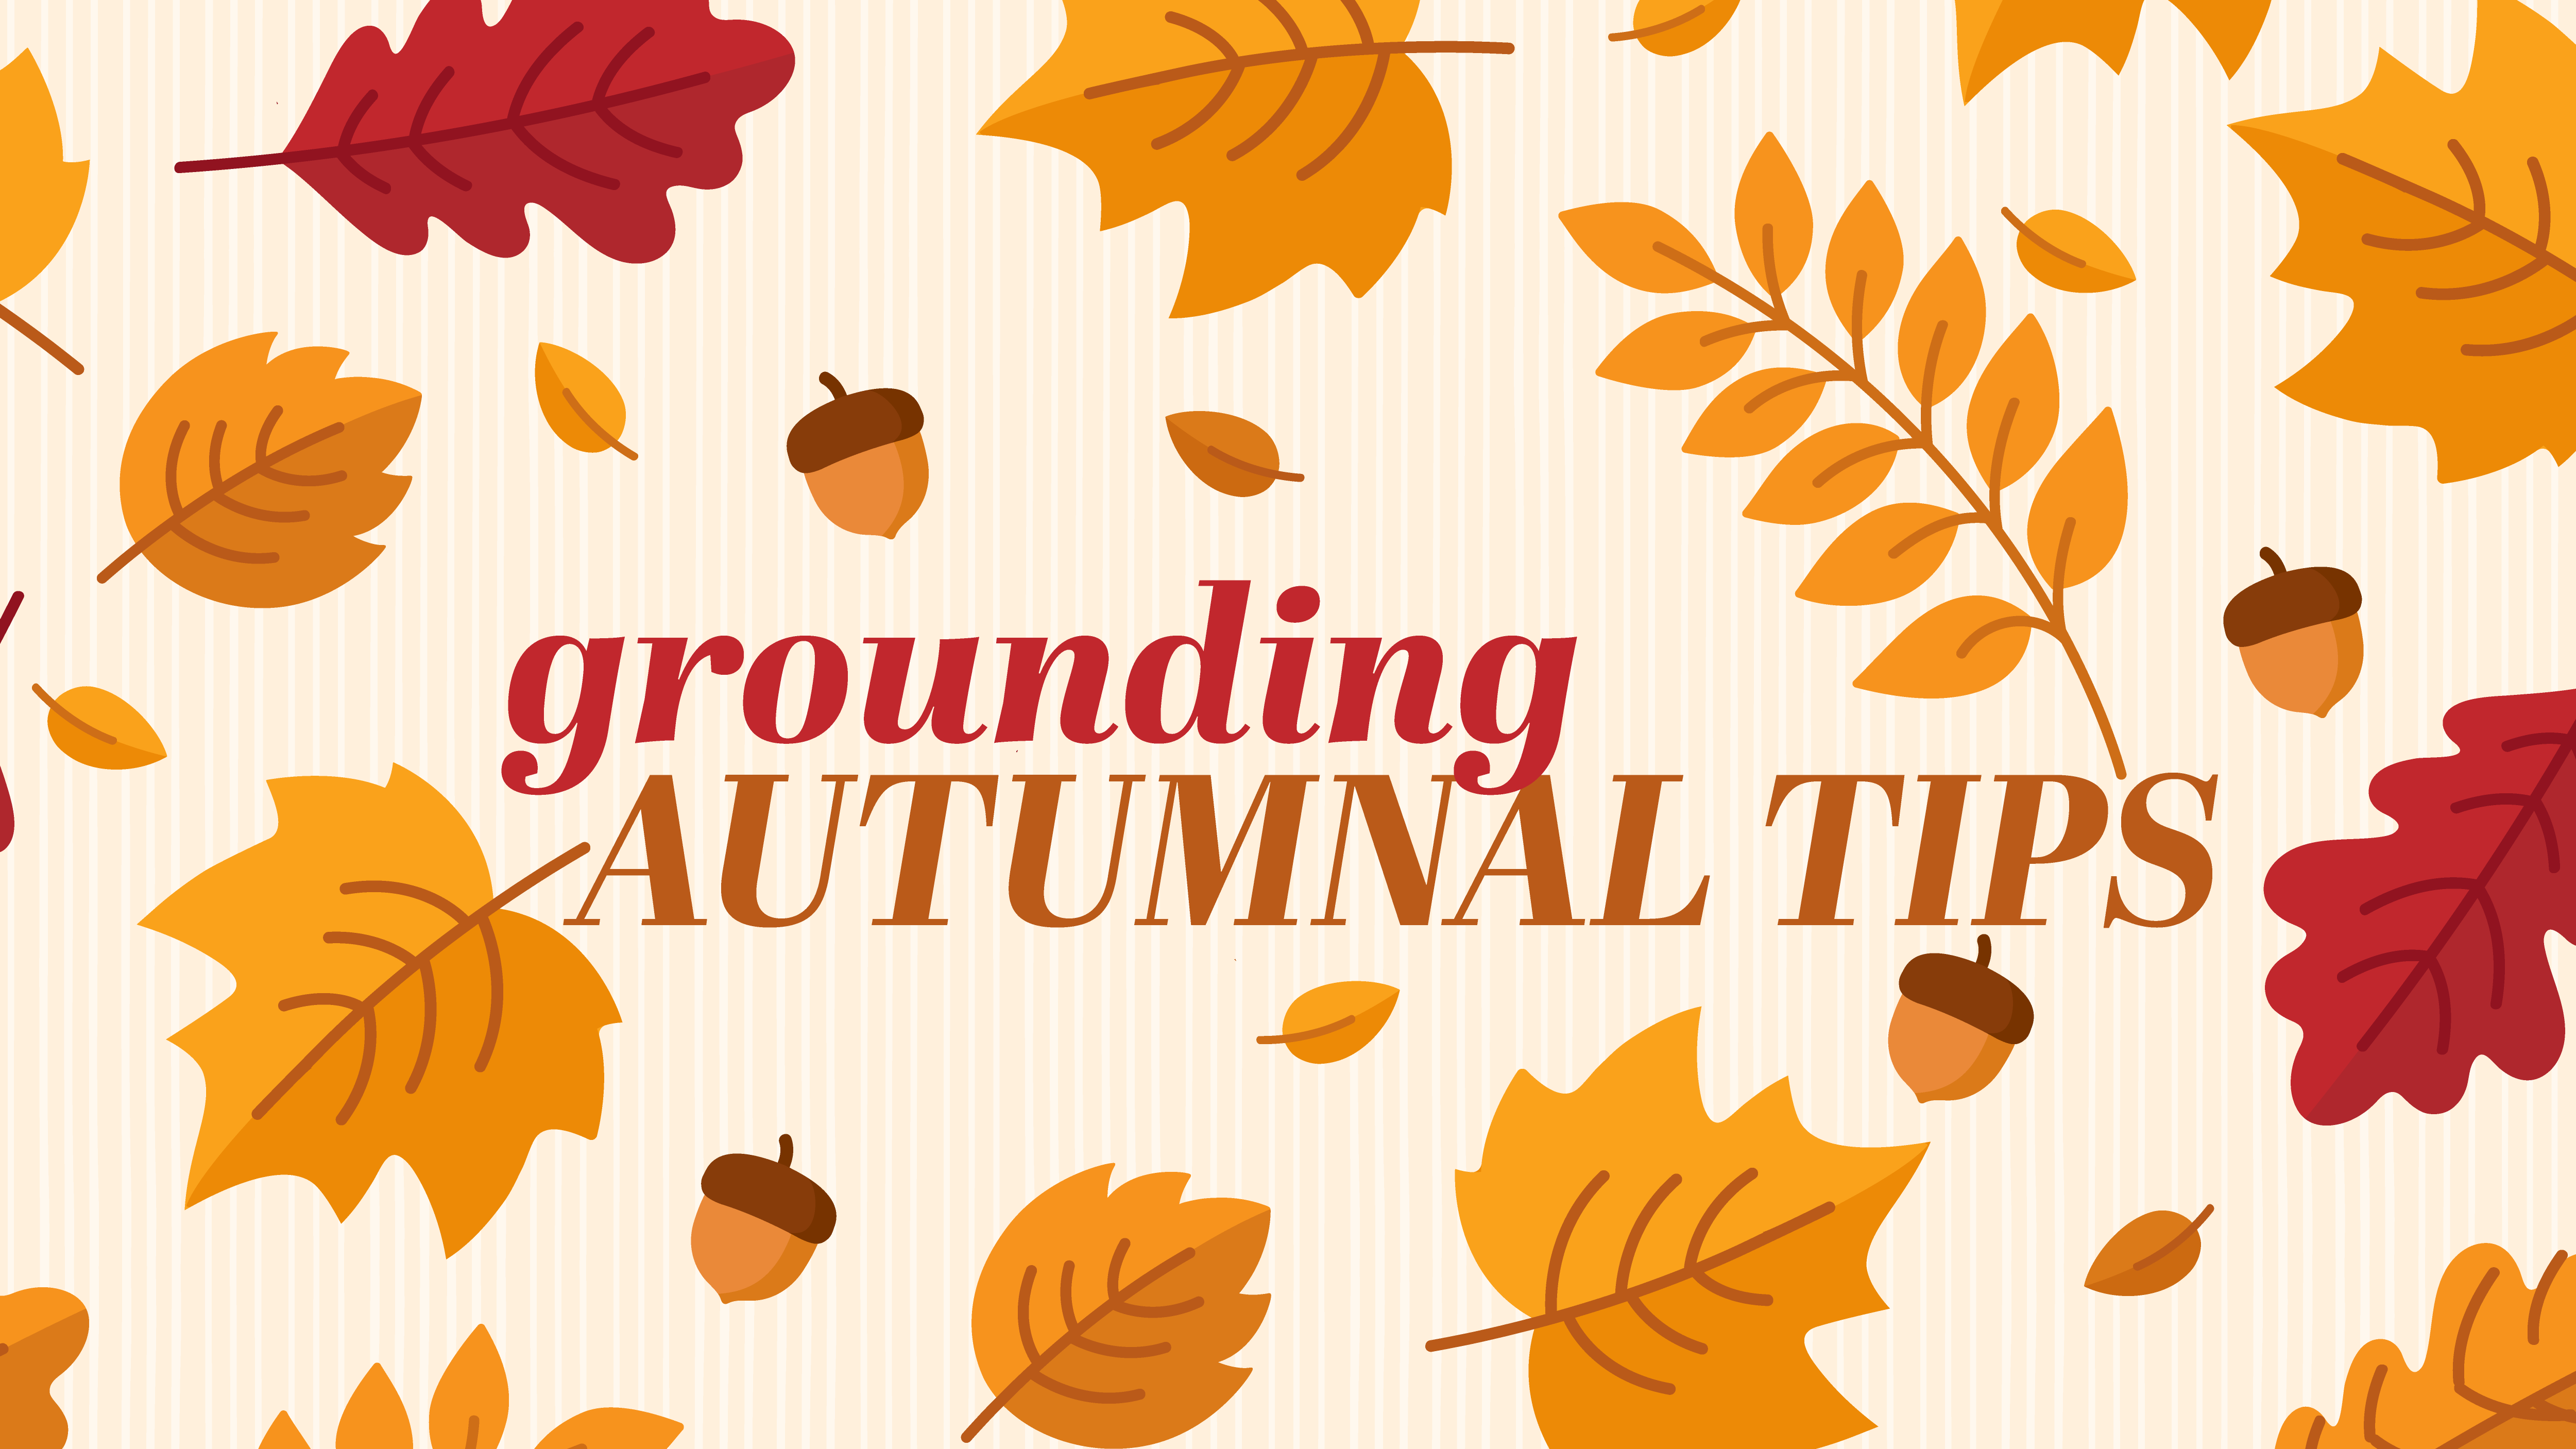 Grounding Autumnal Tips